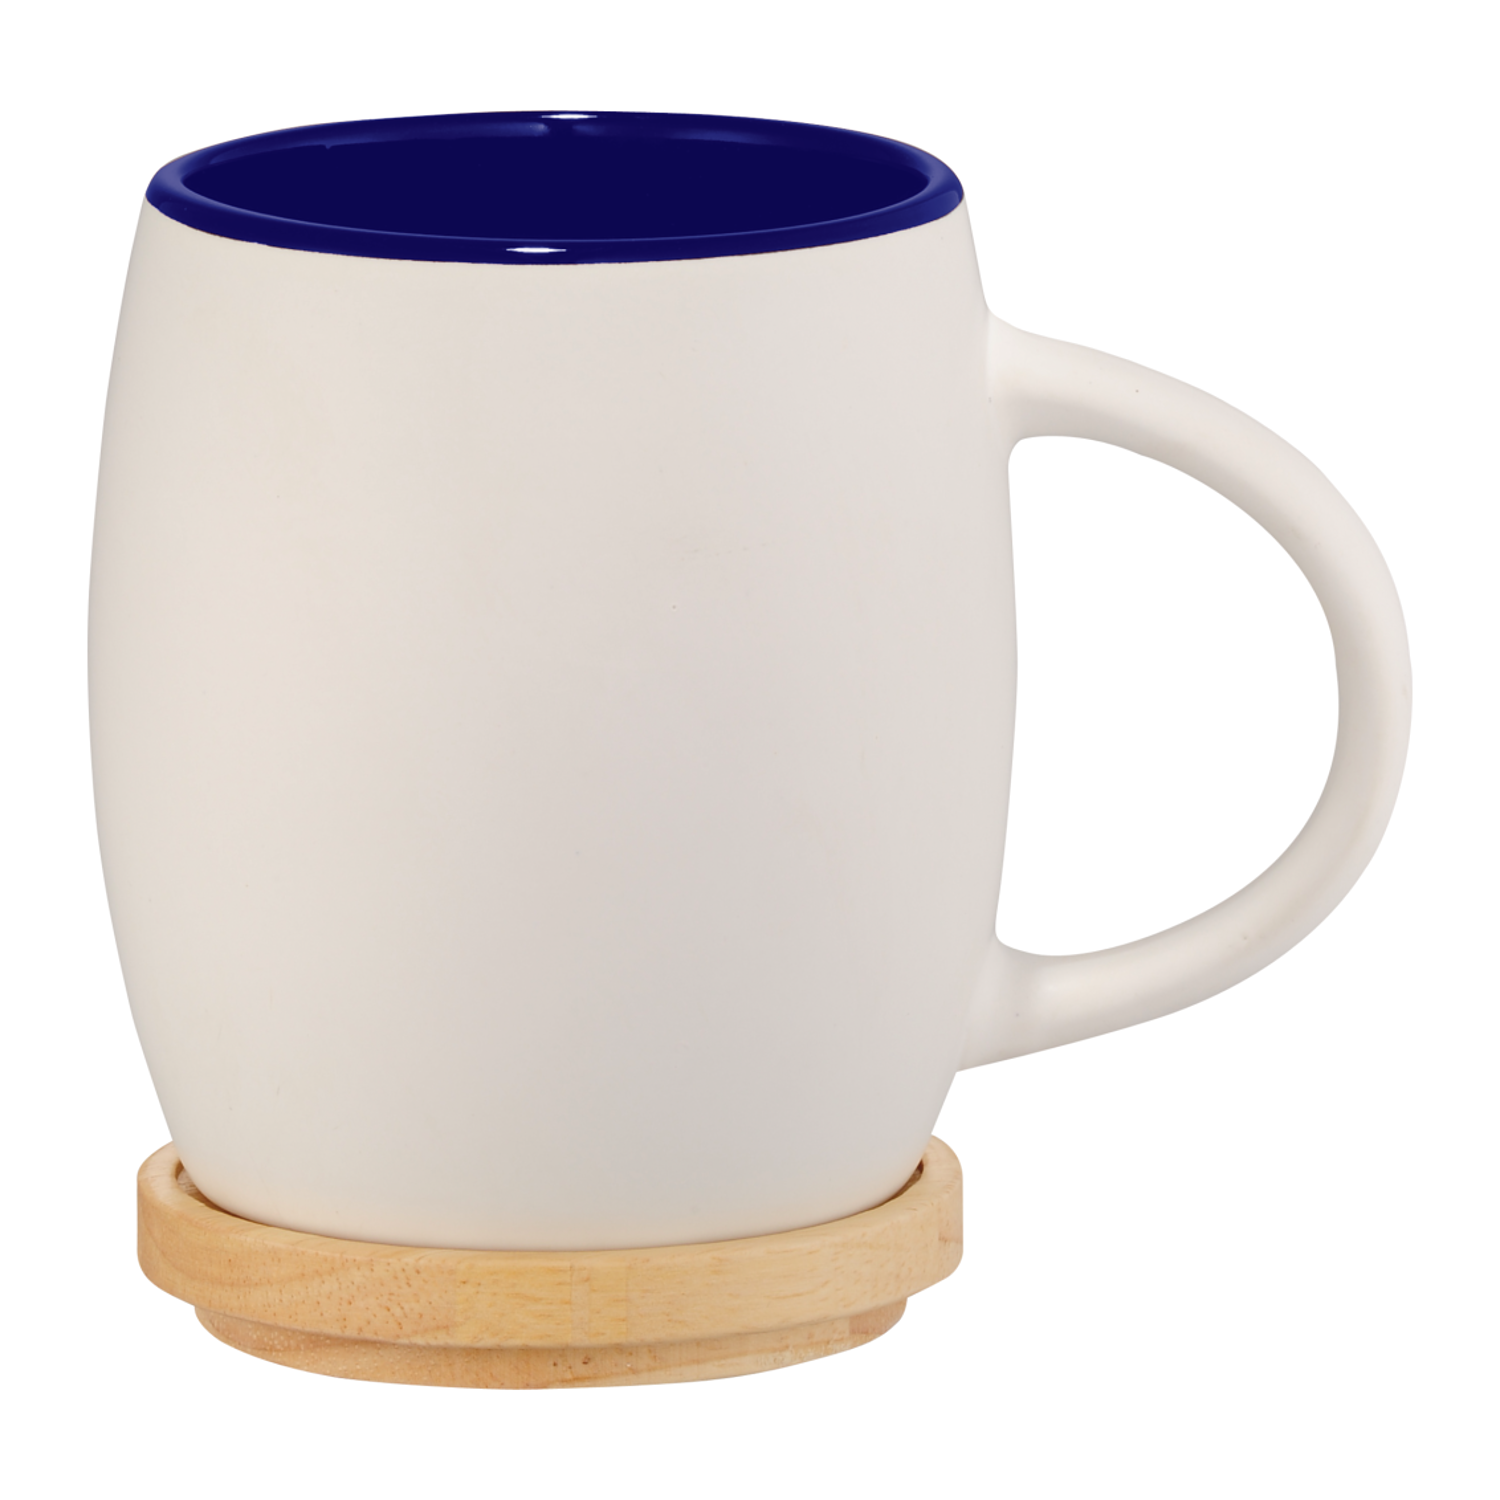 LEEDS 1625-40 - Hearth Ceramic Mug with Wood Lid/Coaster 15oz